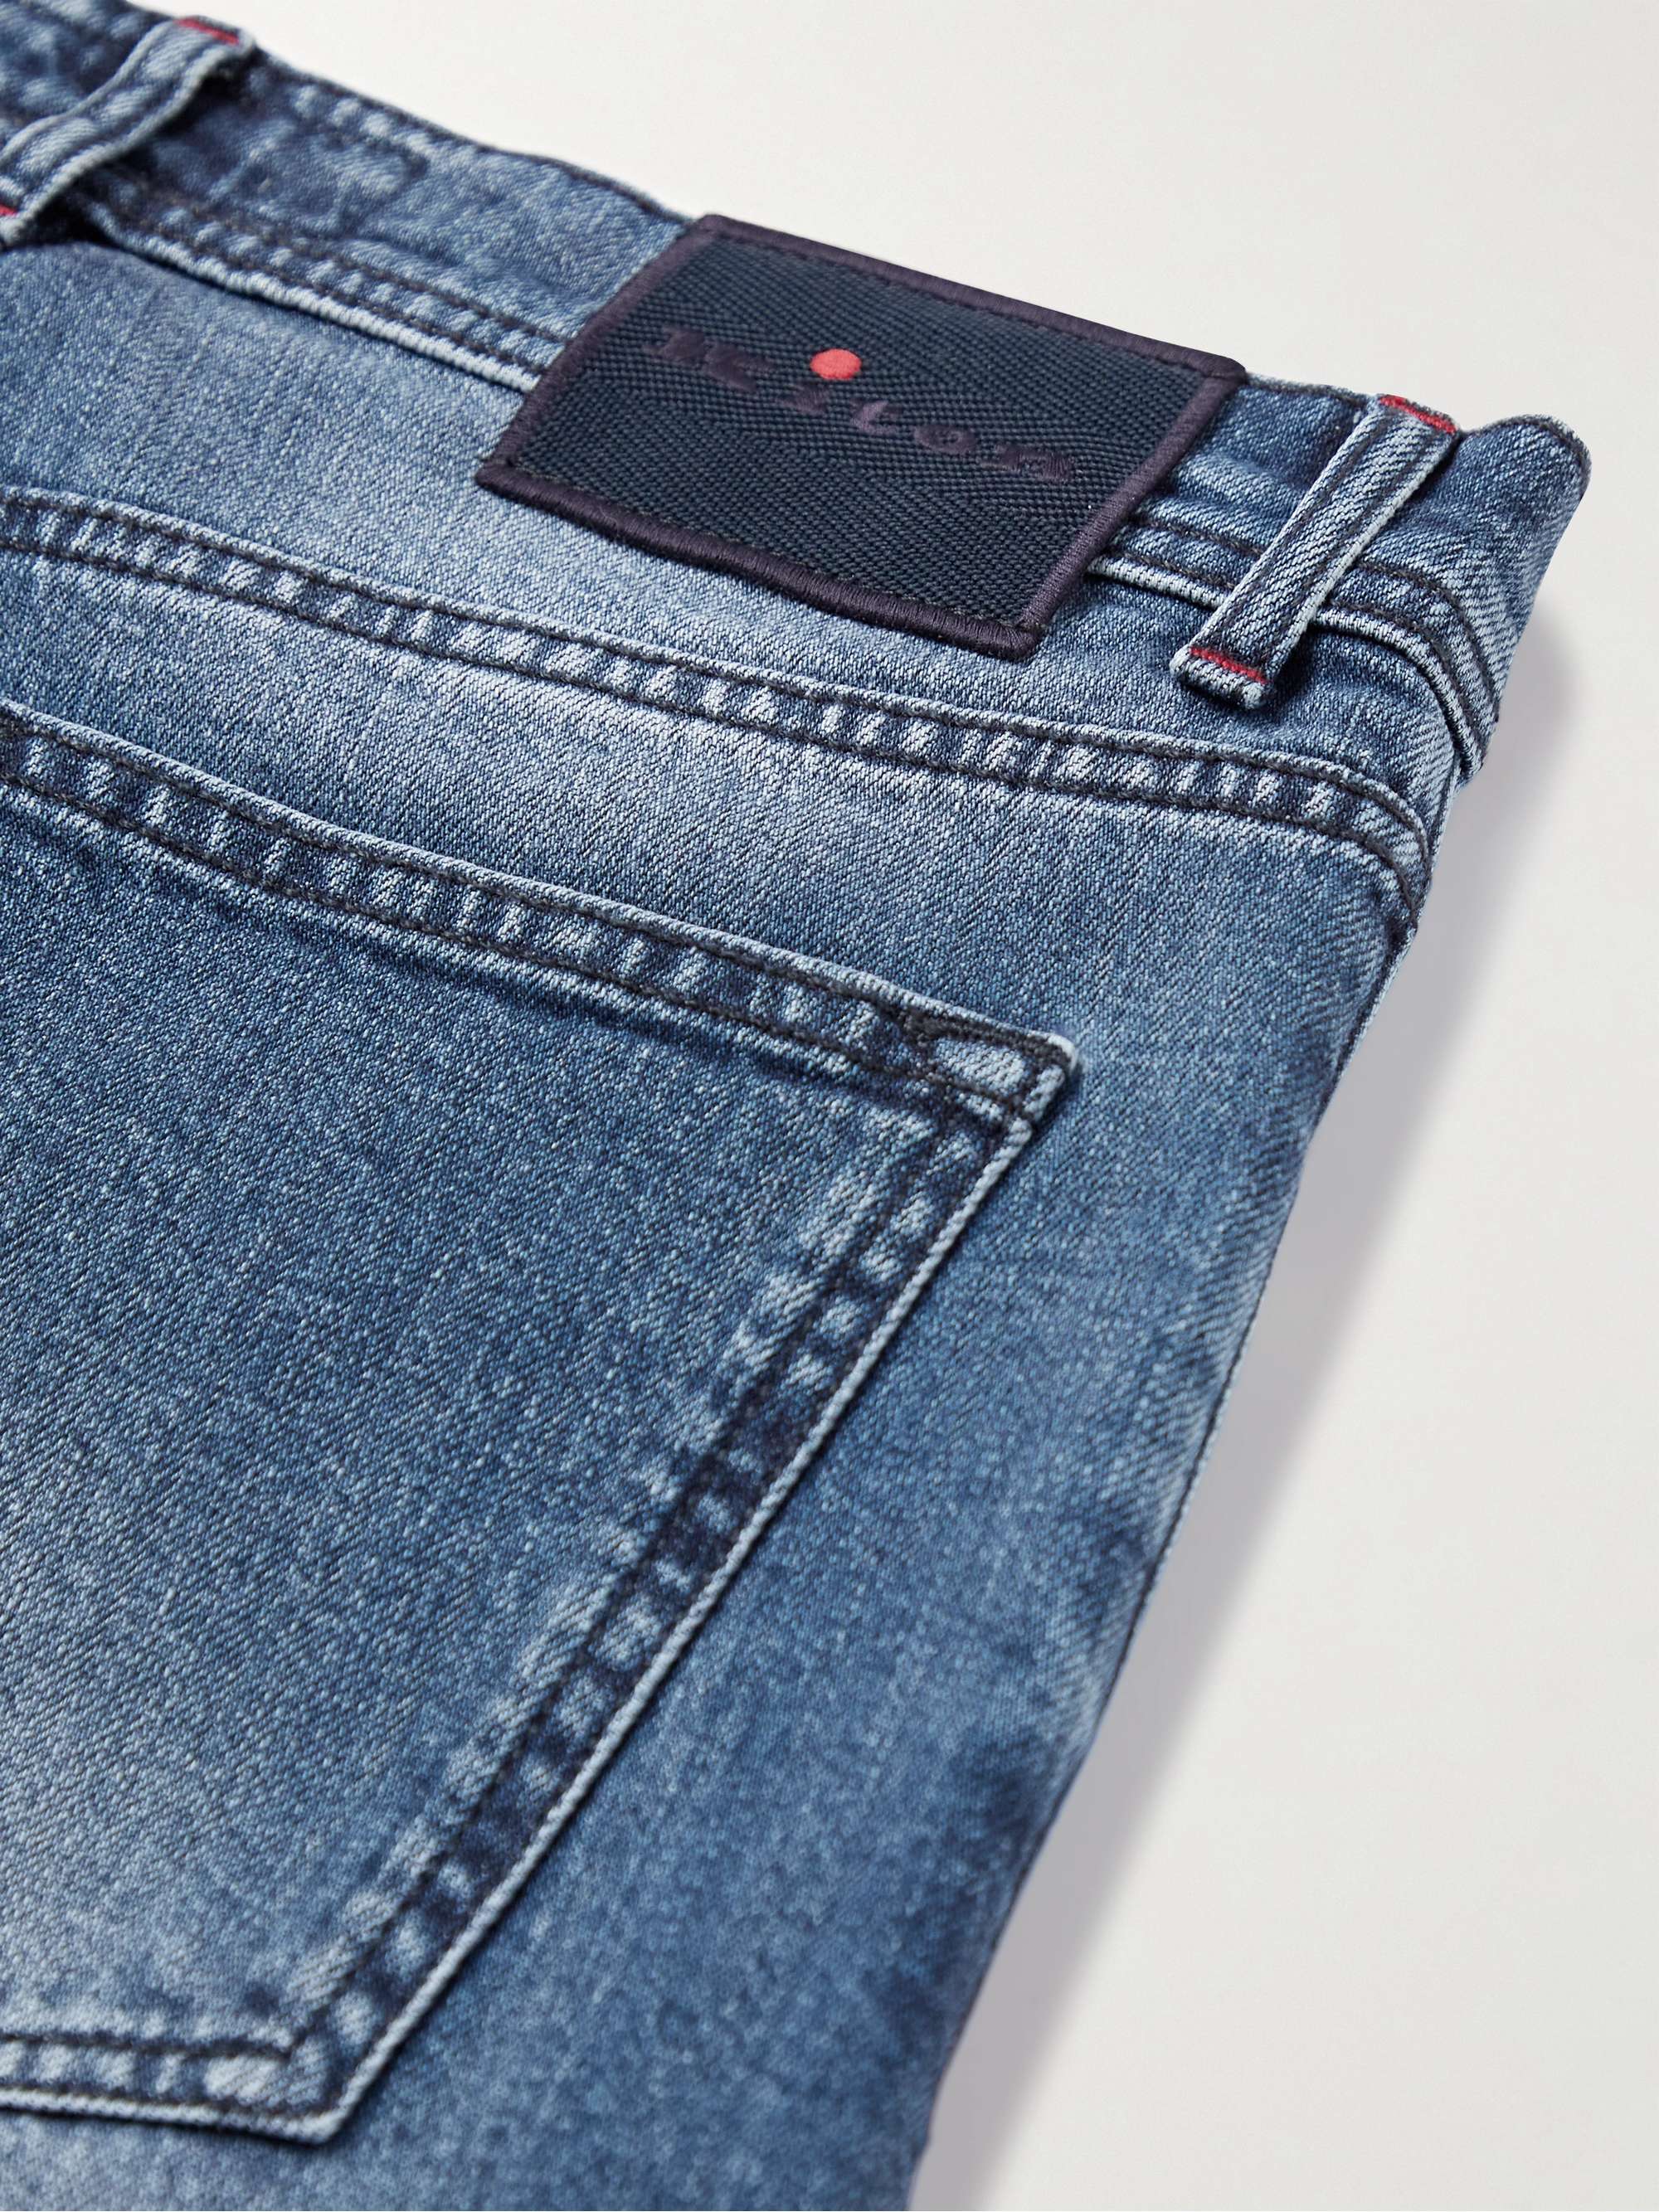 KITON Slim-Fit Straight-Leg Selvedge Jeans | MR PORTER